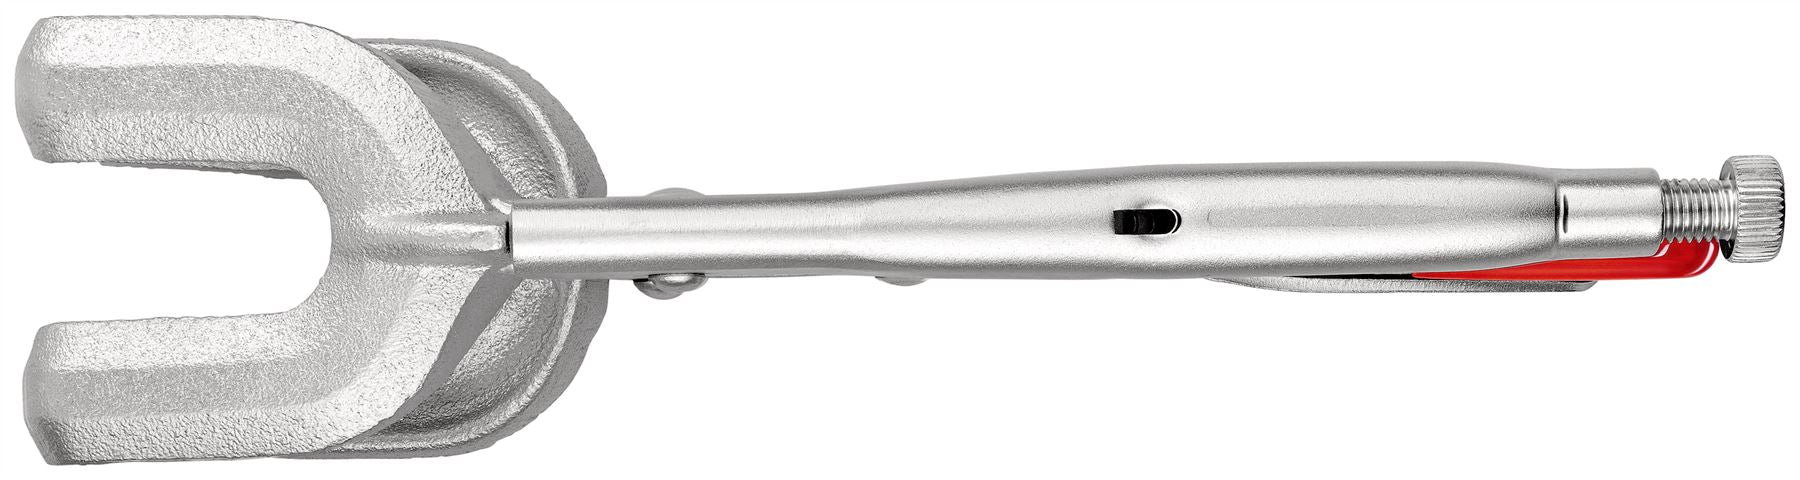 Knipex Welding Grip Locking Pliers 280mm Galvanised 42 14 280